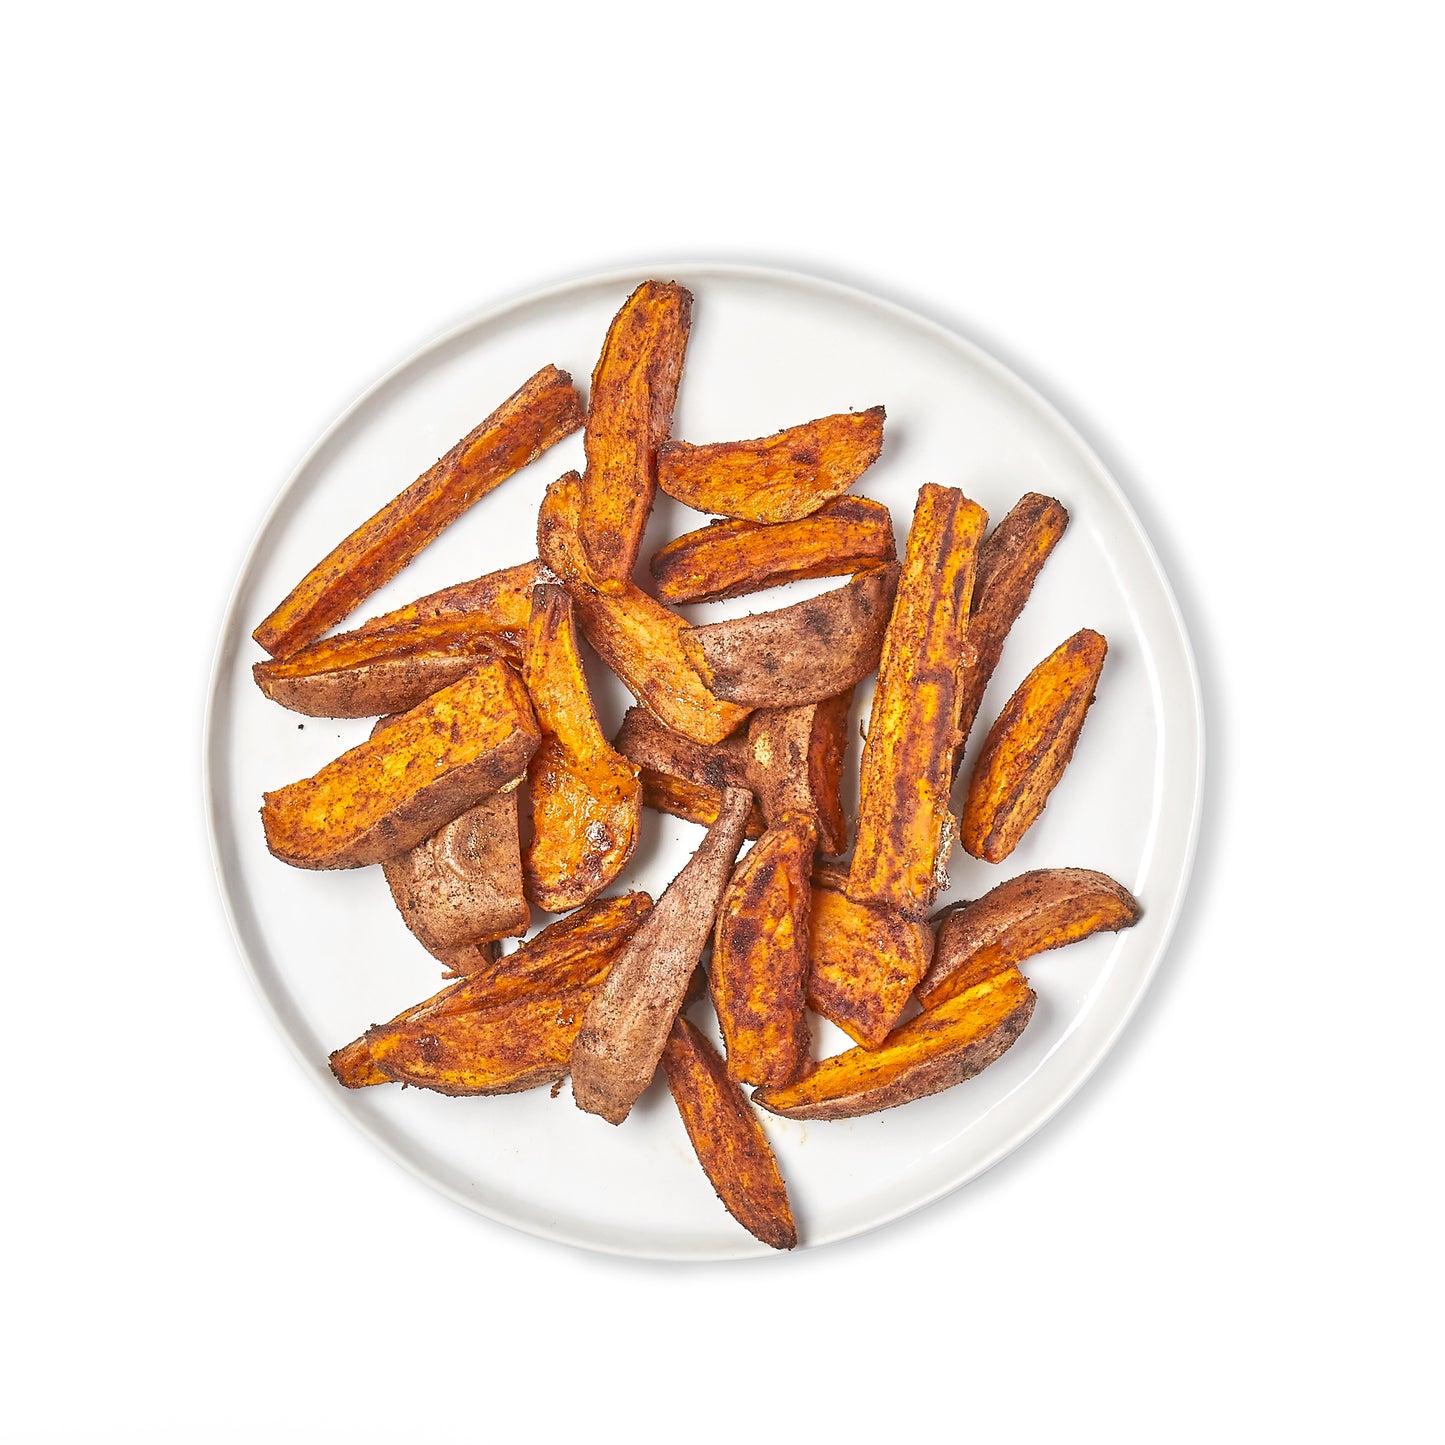 smoky sweet potato fries azuluna foods ala carte premium pasture raised ready to eat meals